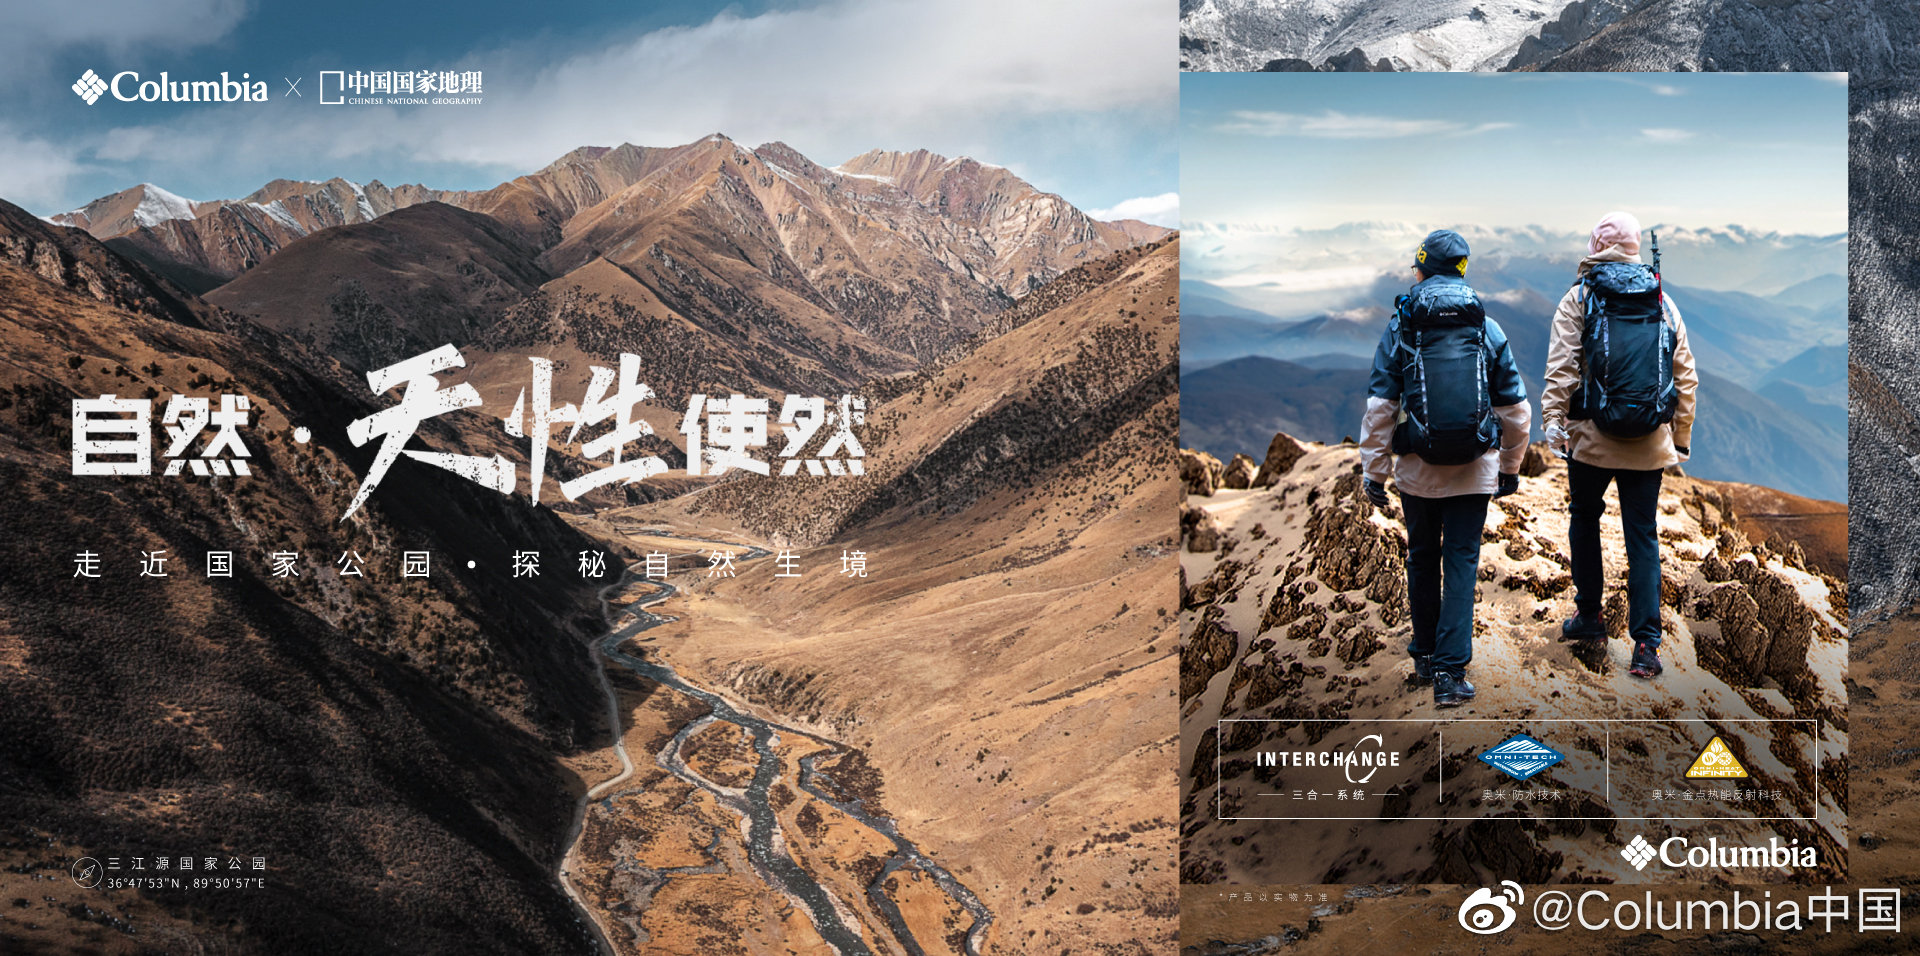 Columbia × 中国国家地理一同探秘国家公园